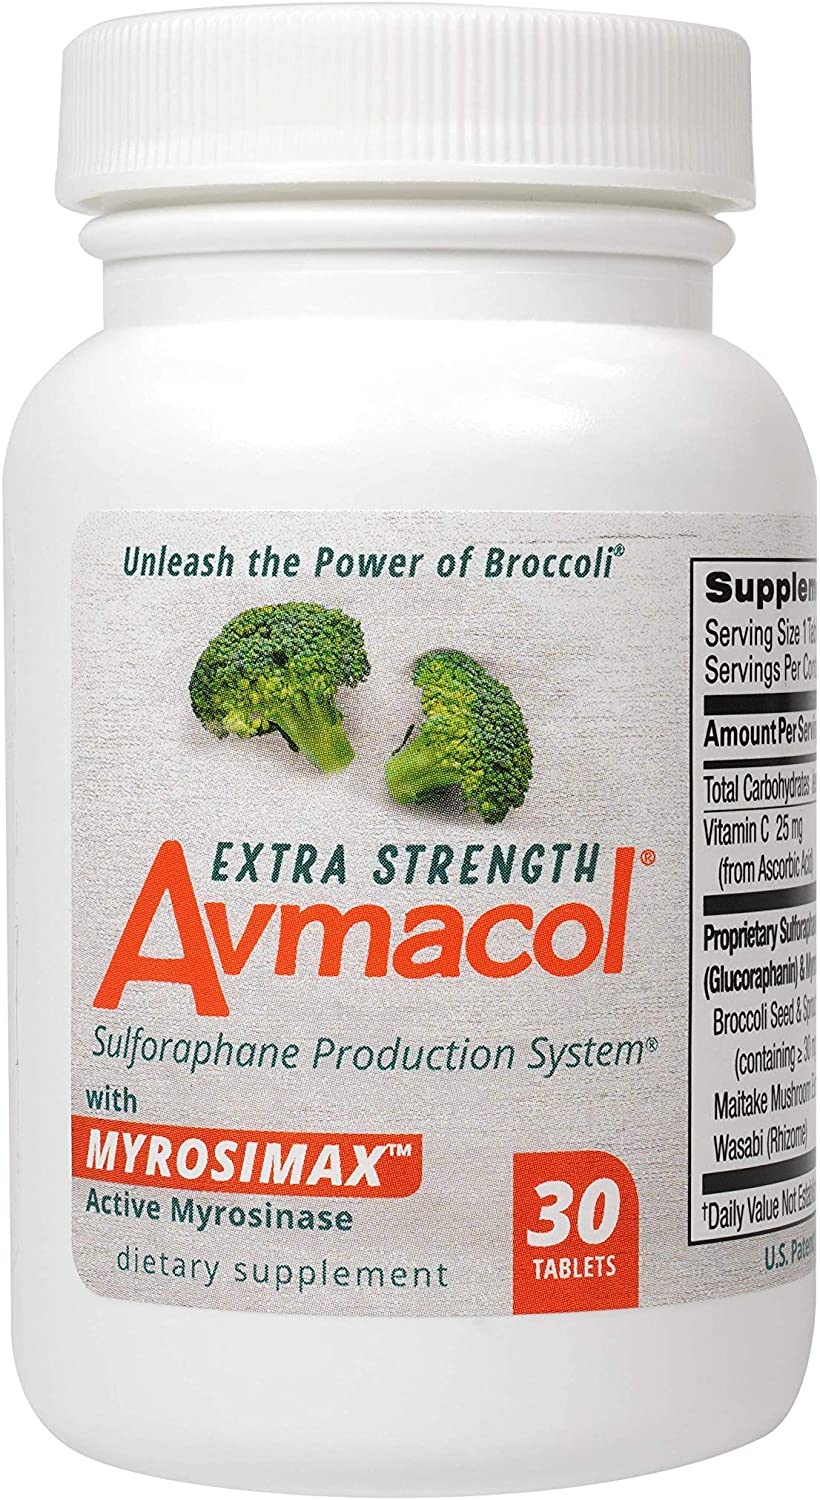 Avmacol Extra Strength